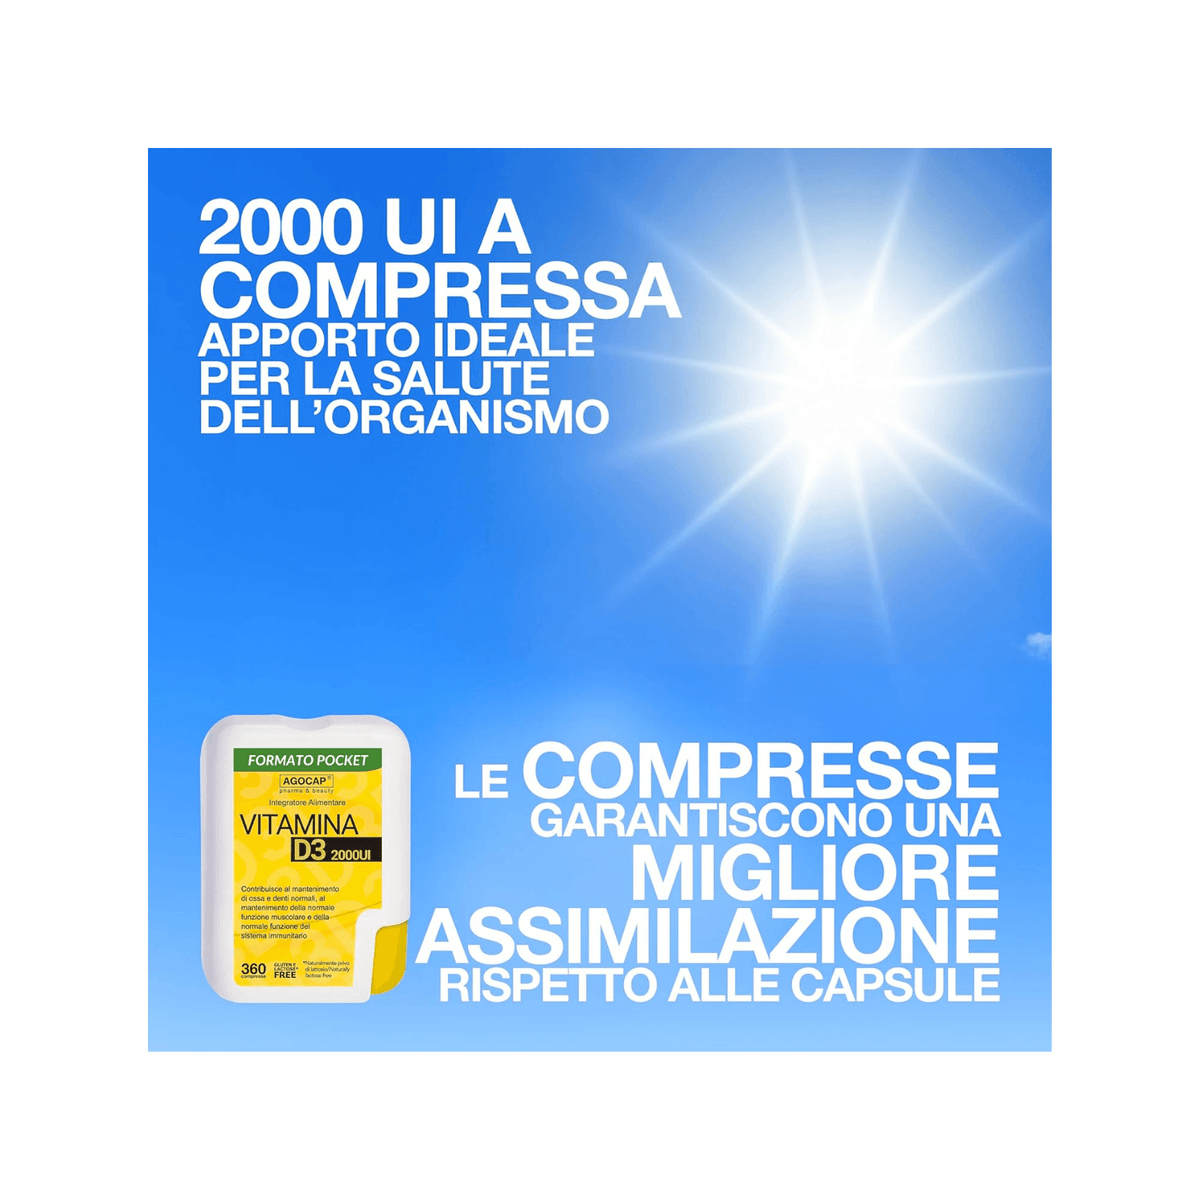 Vitamina D3 2000 UI - Formato Pocket - 360 compresse